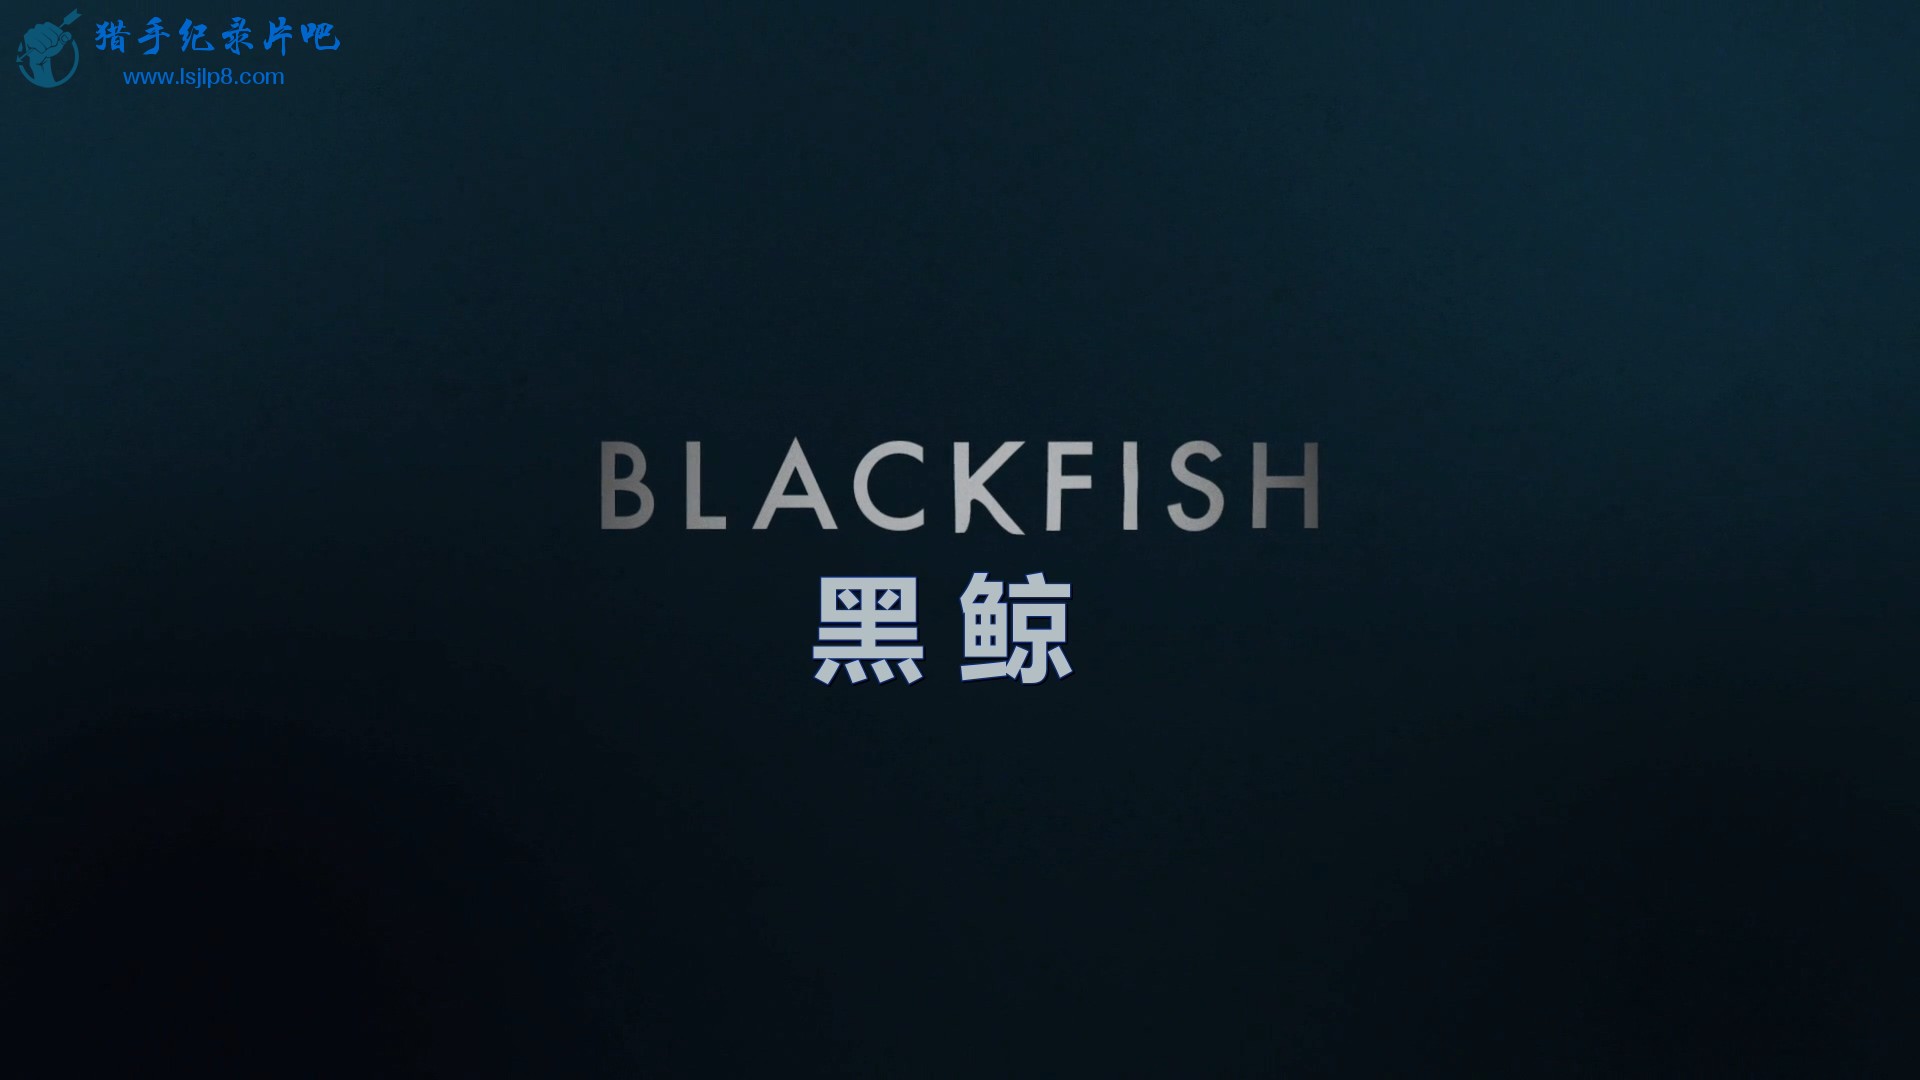 Blackfish.2013.1080p.BluRay.x264-GECKOS.mkv_20220127_113356.956.jpg